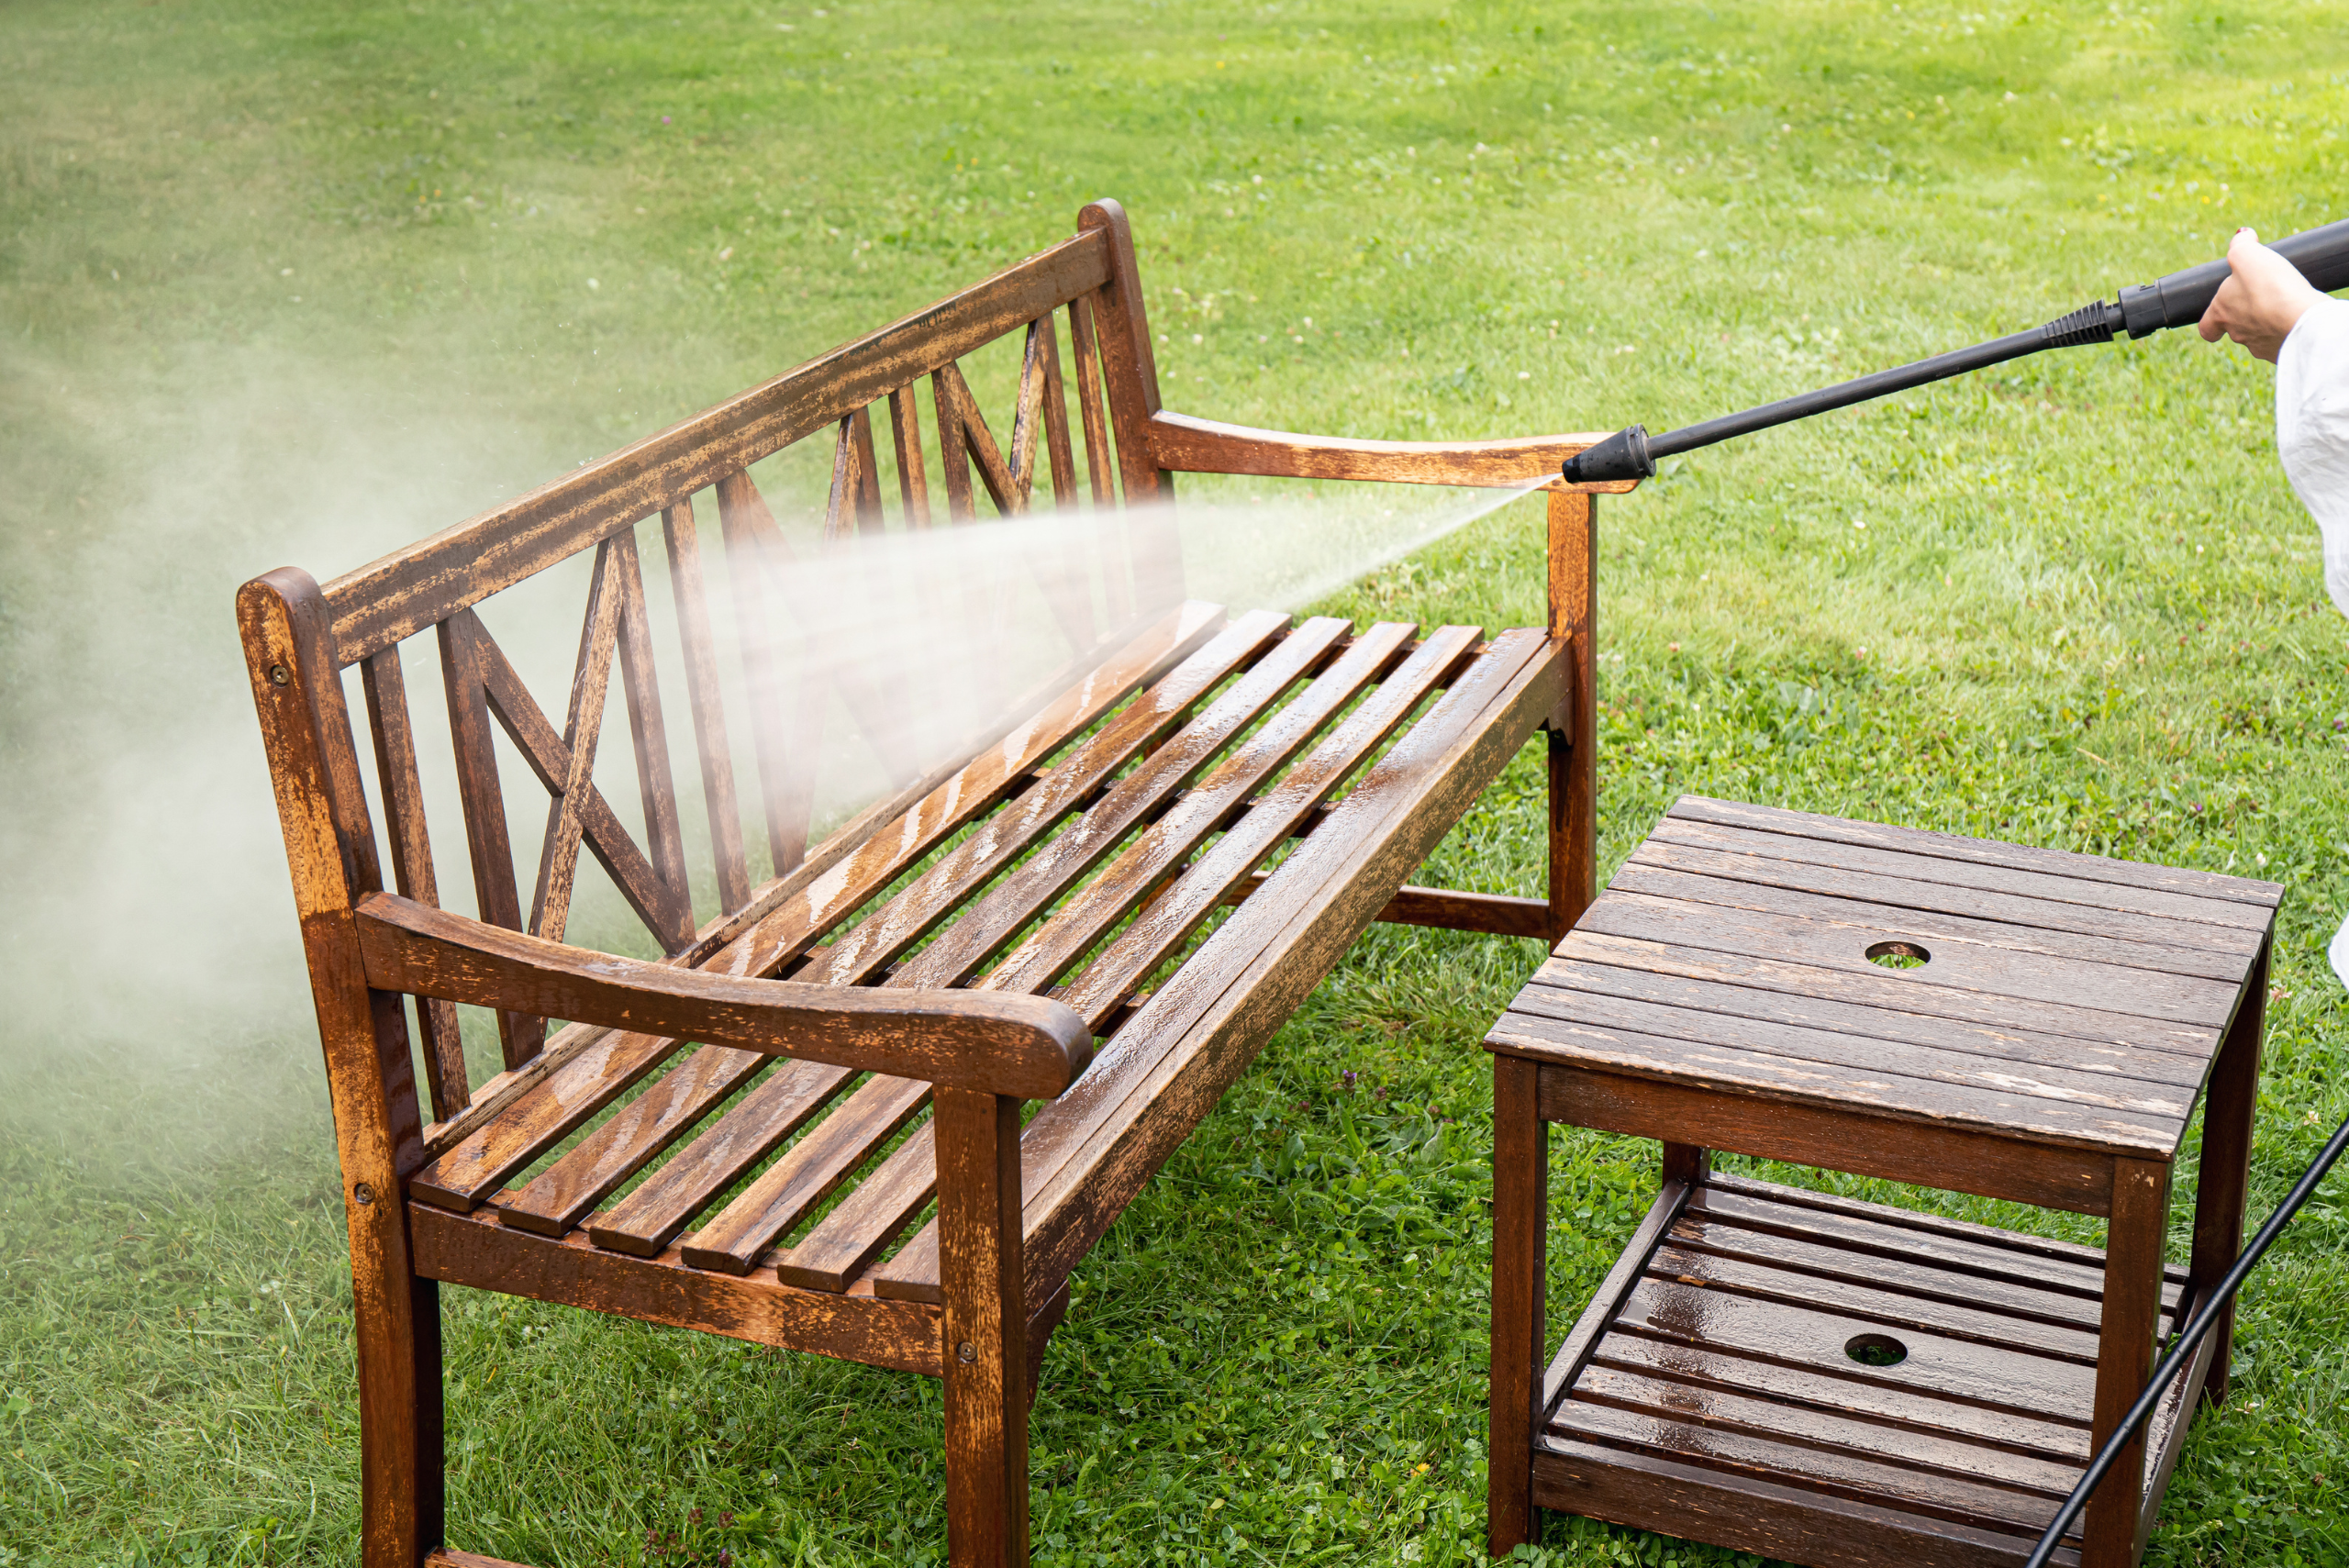 Spraying outdoor bench.